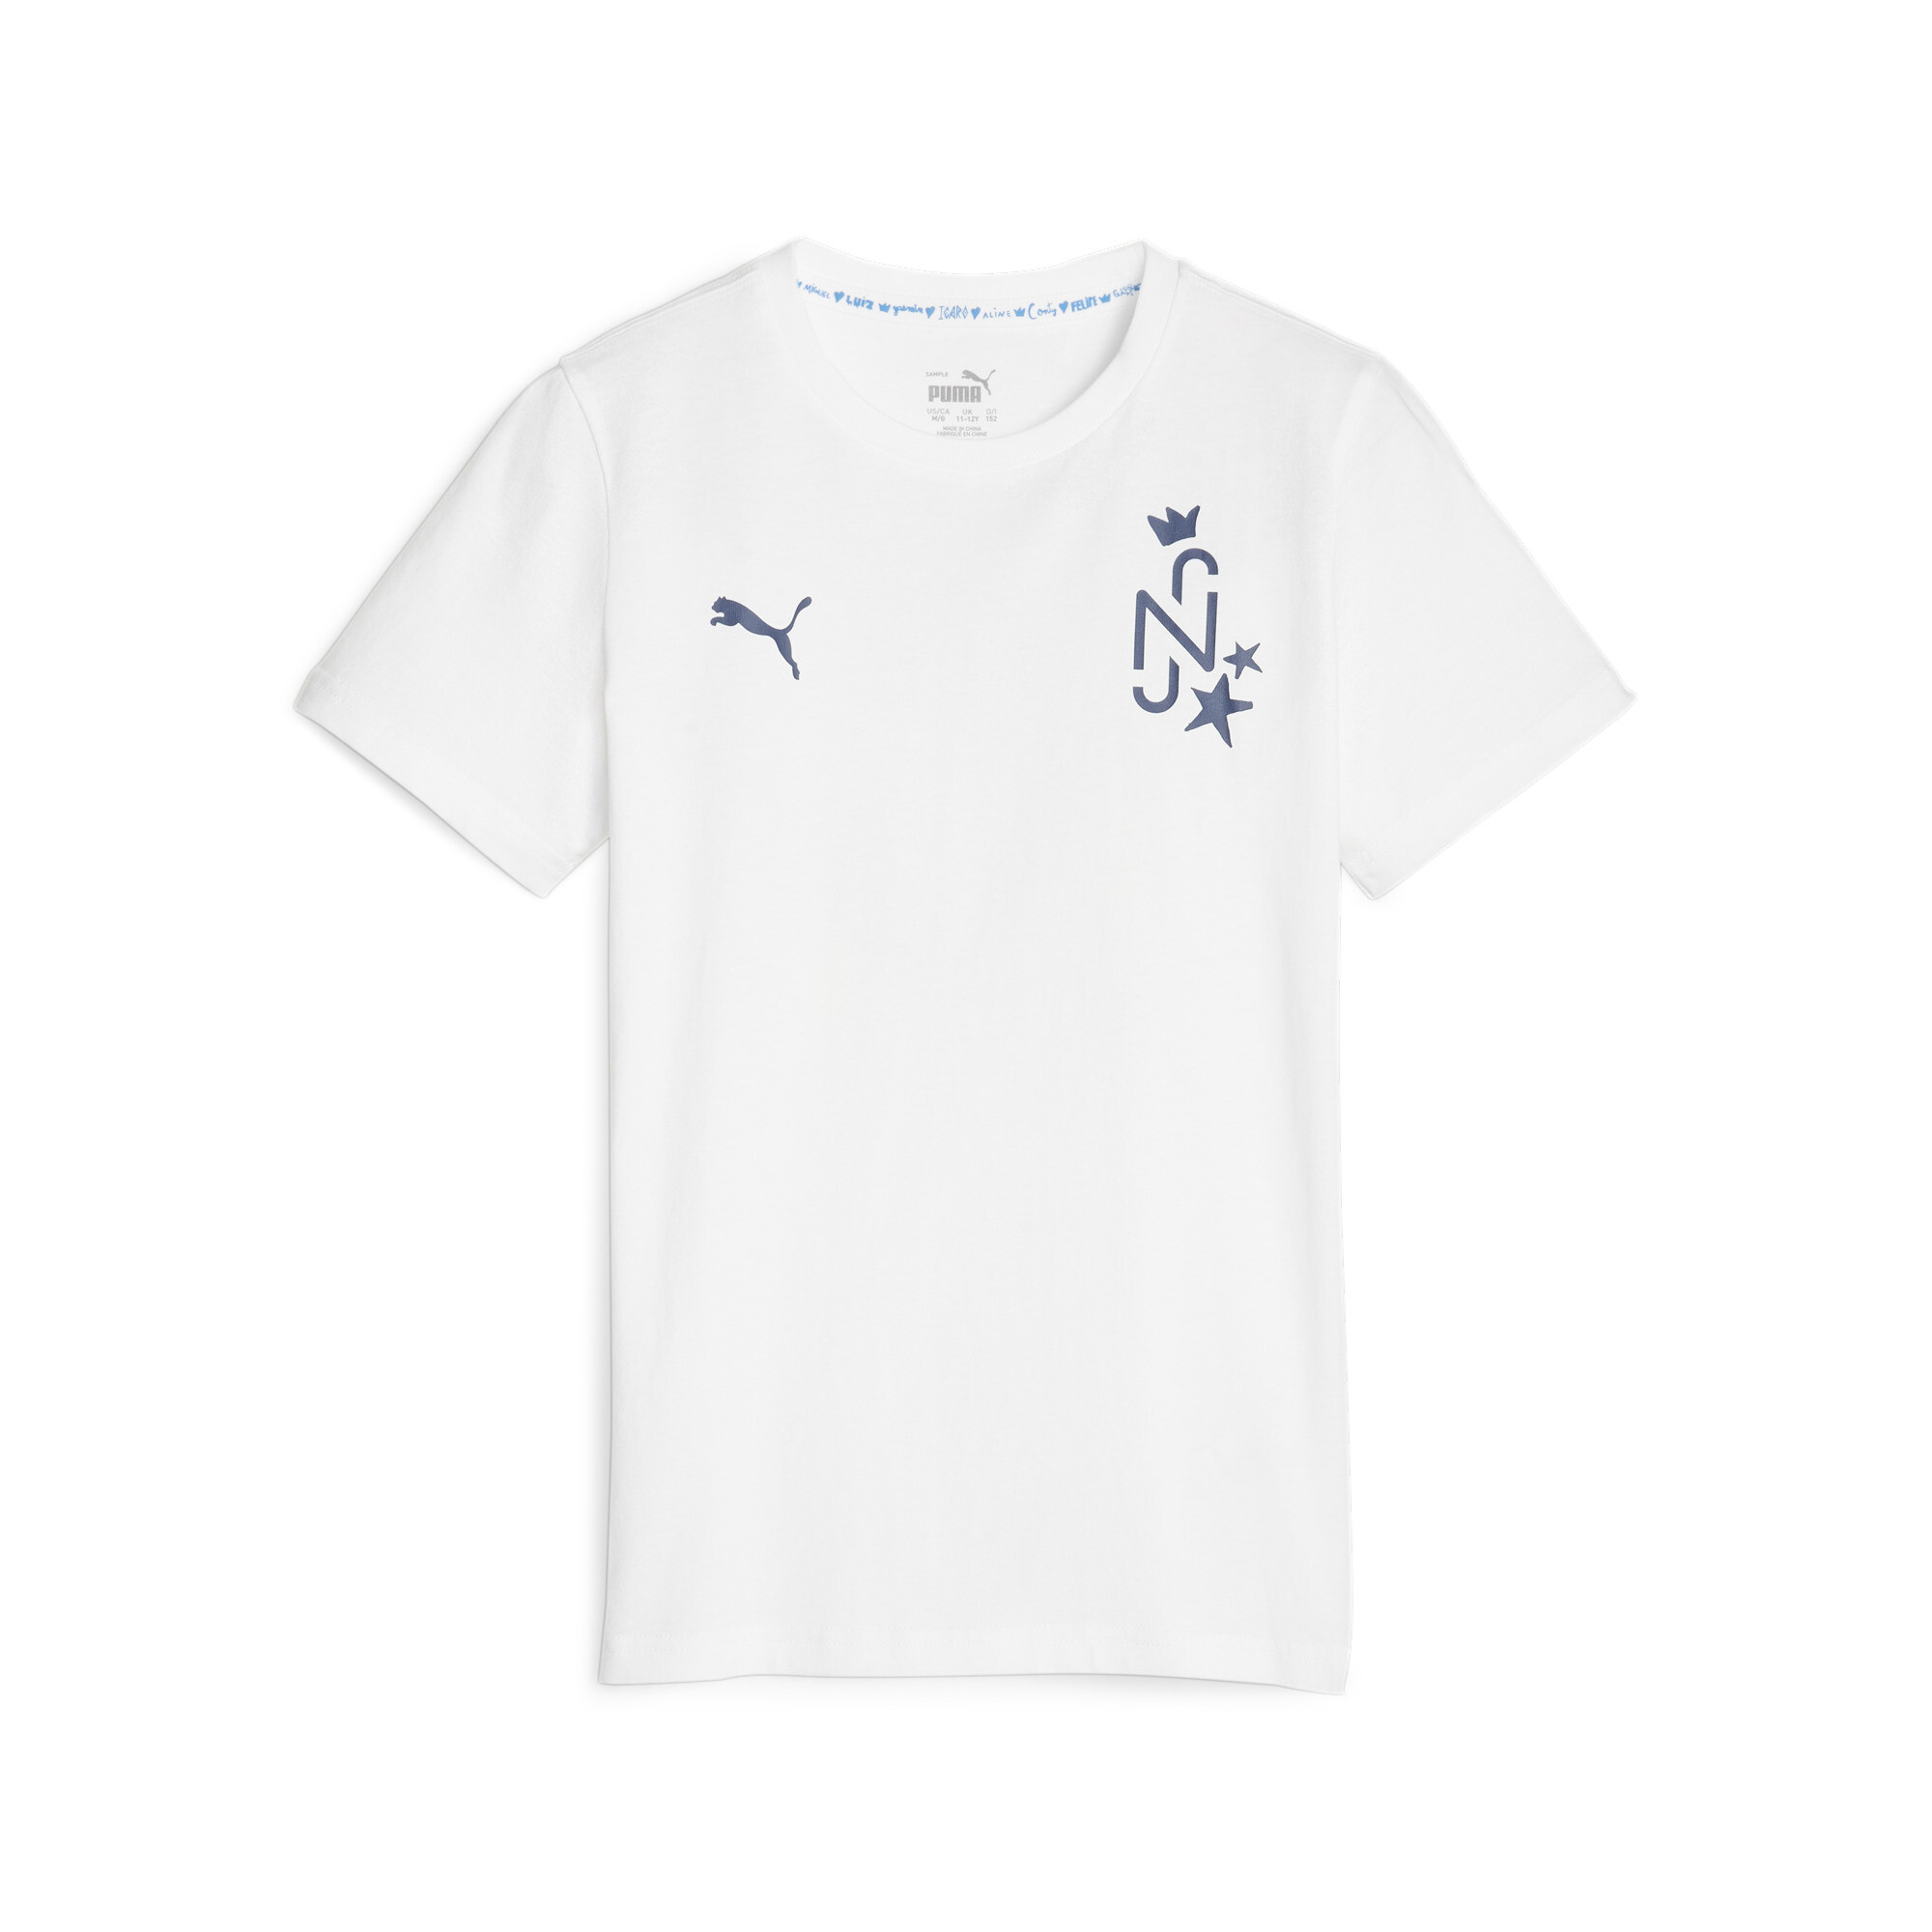 PUMA Neymar Jr Football T-Shirt In White, Size 9-10 Youth